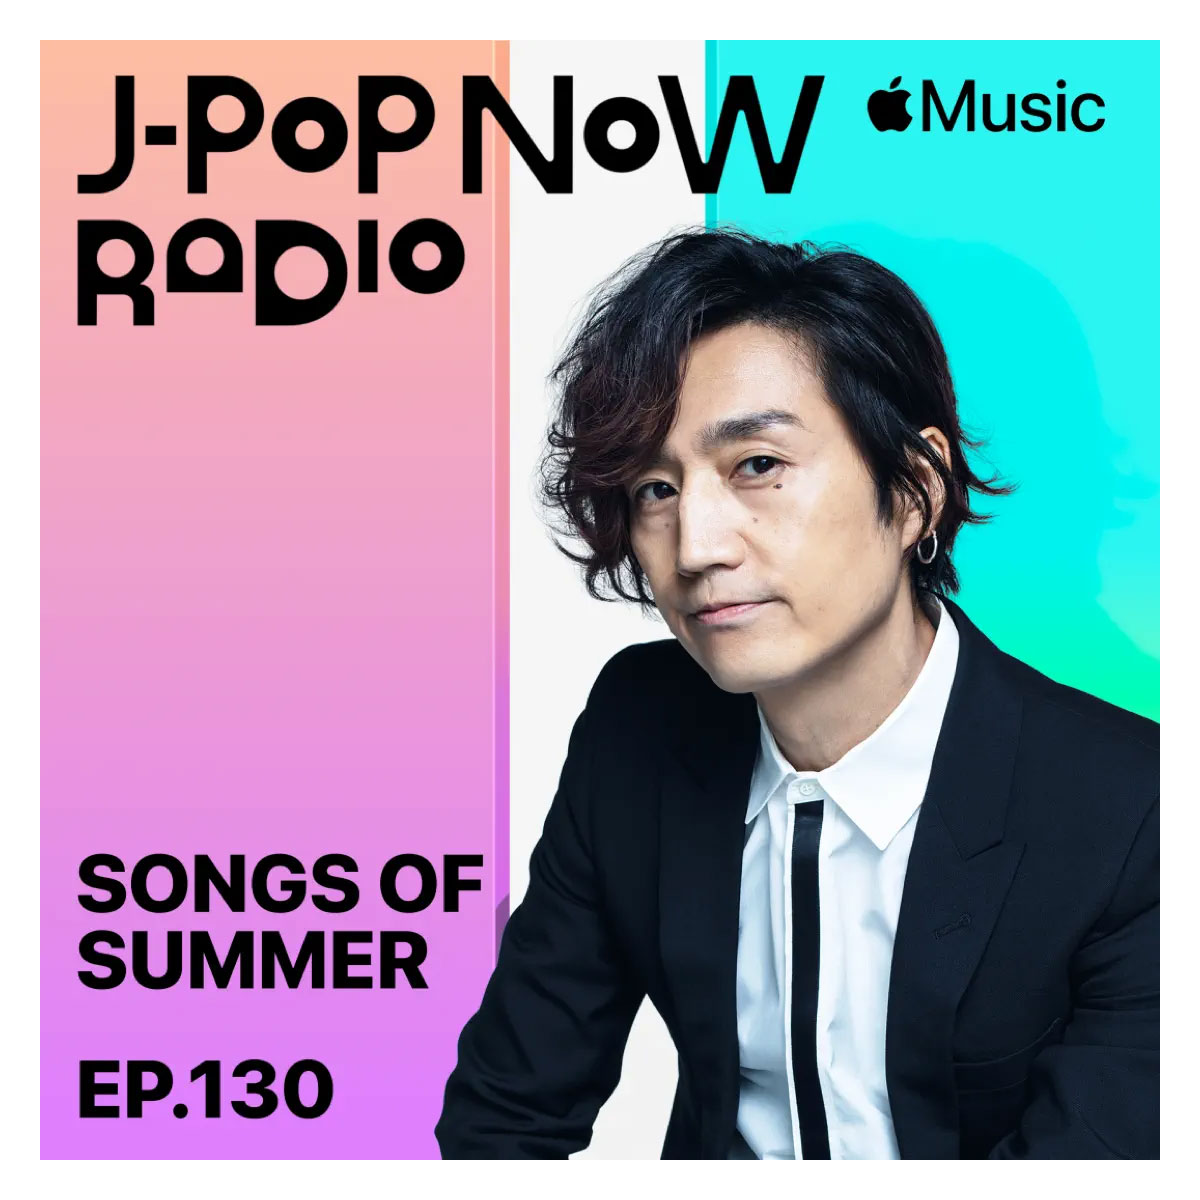 J-Pop Now Radio with Kentaro Ochiai 特集：サマーソング